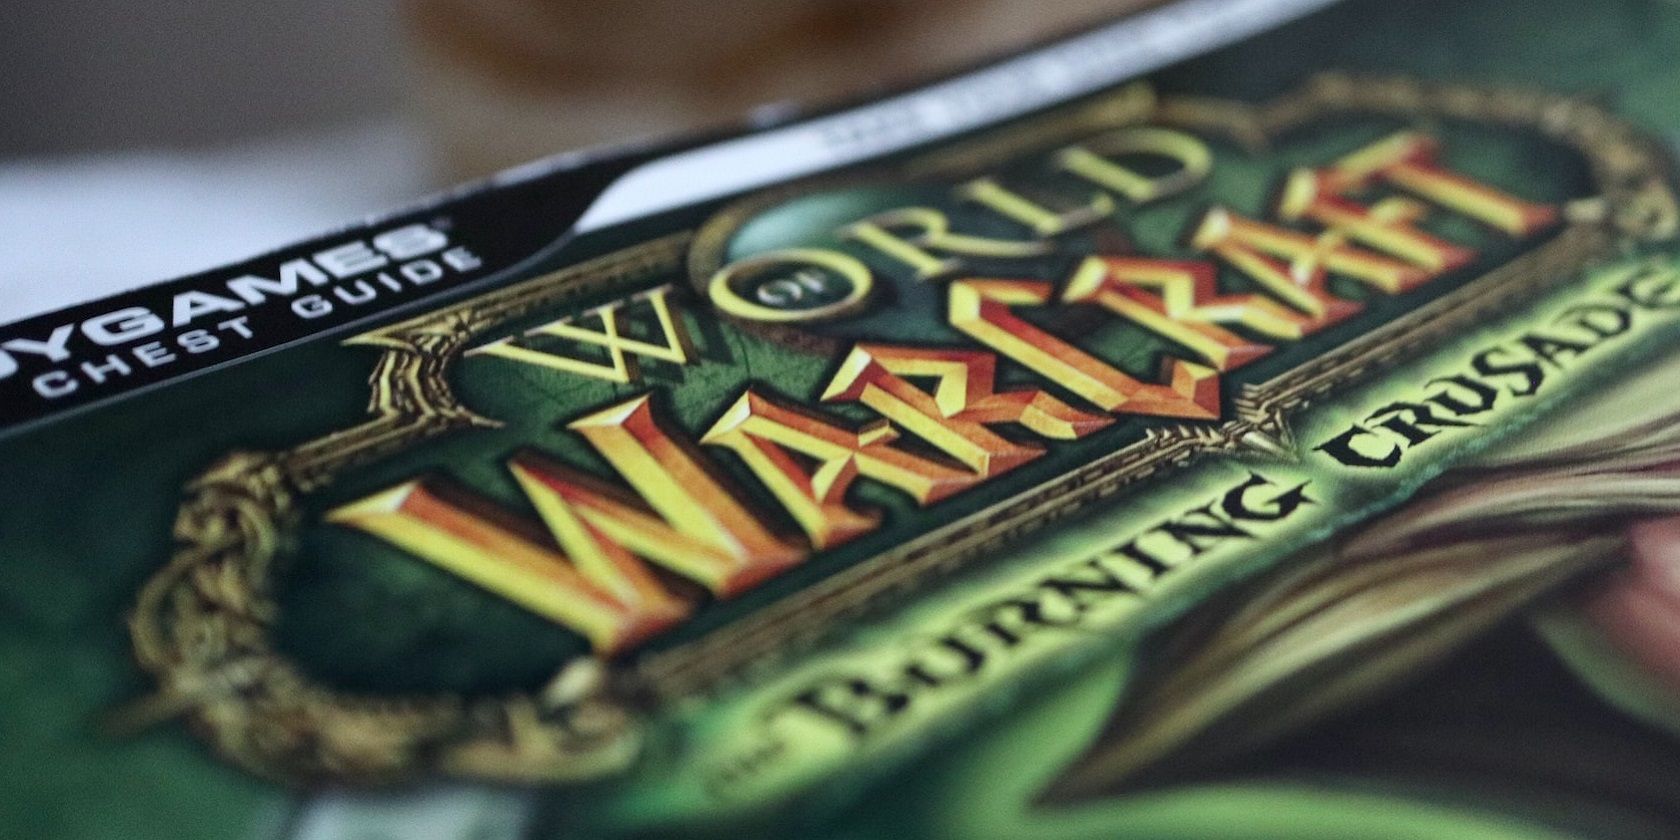 World Of Warcraft Cover Image.jpg